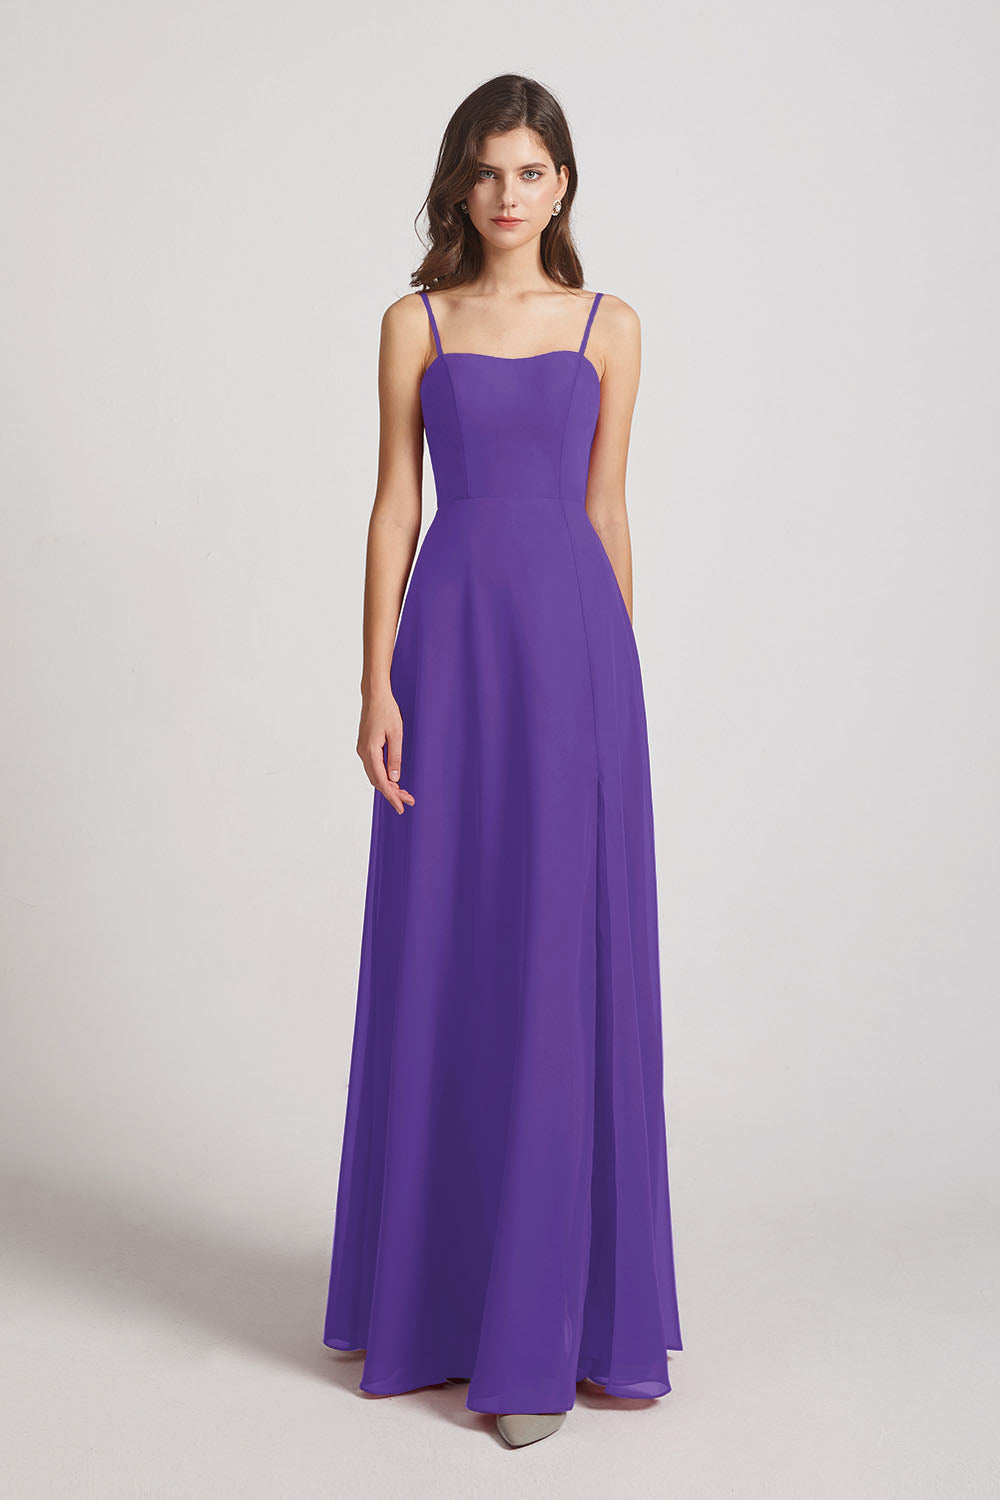 Alfa Bridal Purple Spaghetti Straps Long Chiffon Bridesmaid Dresses with Side Slit (AF0112)